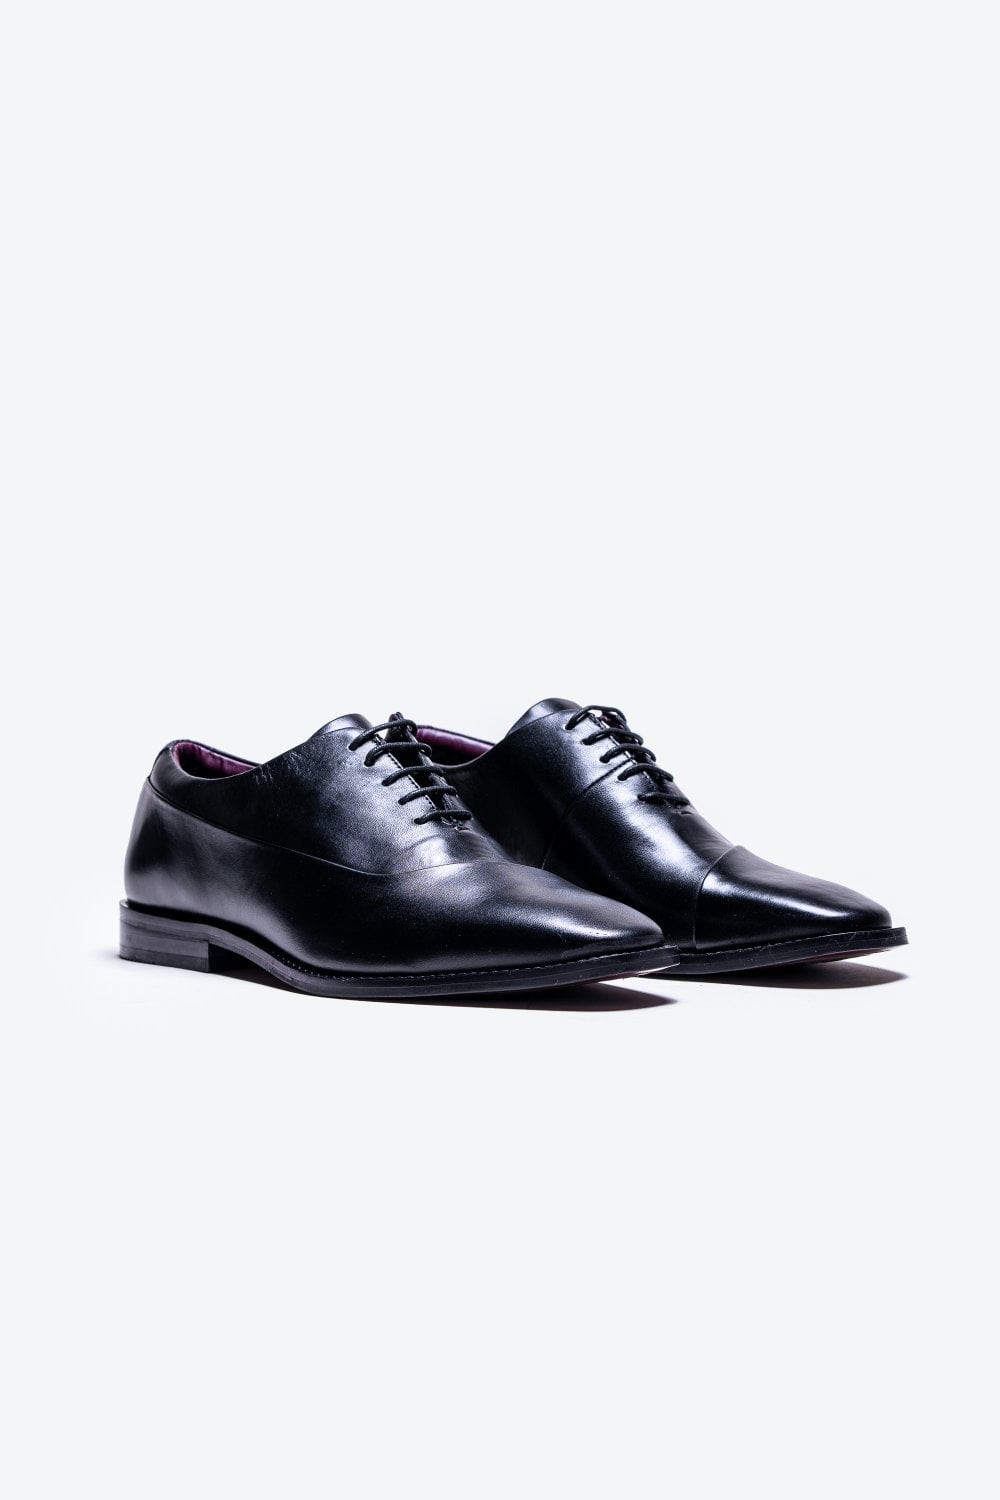 Men's Genuine Leather Oxford Shoes- SEVILLE